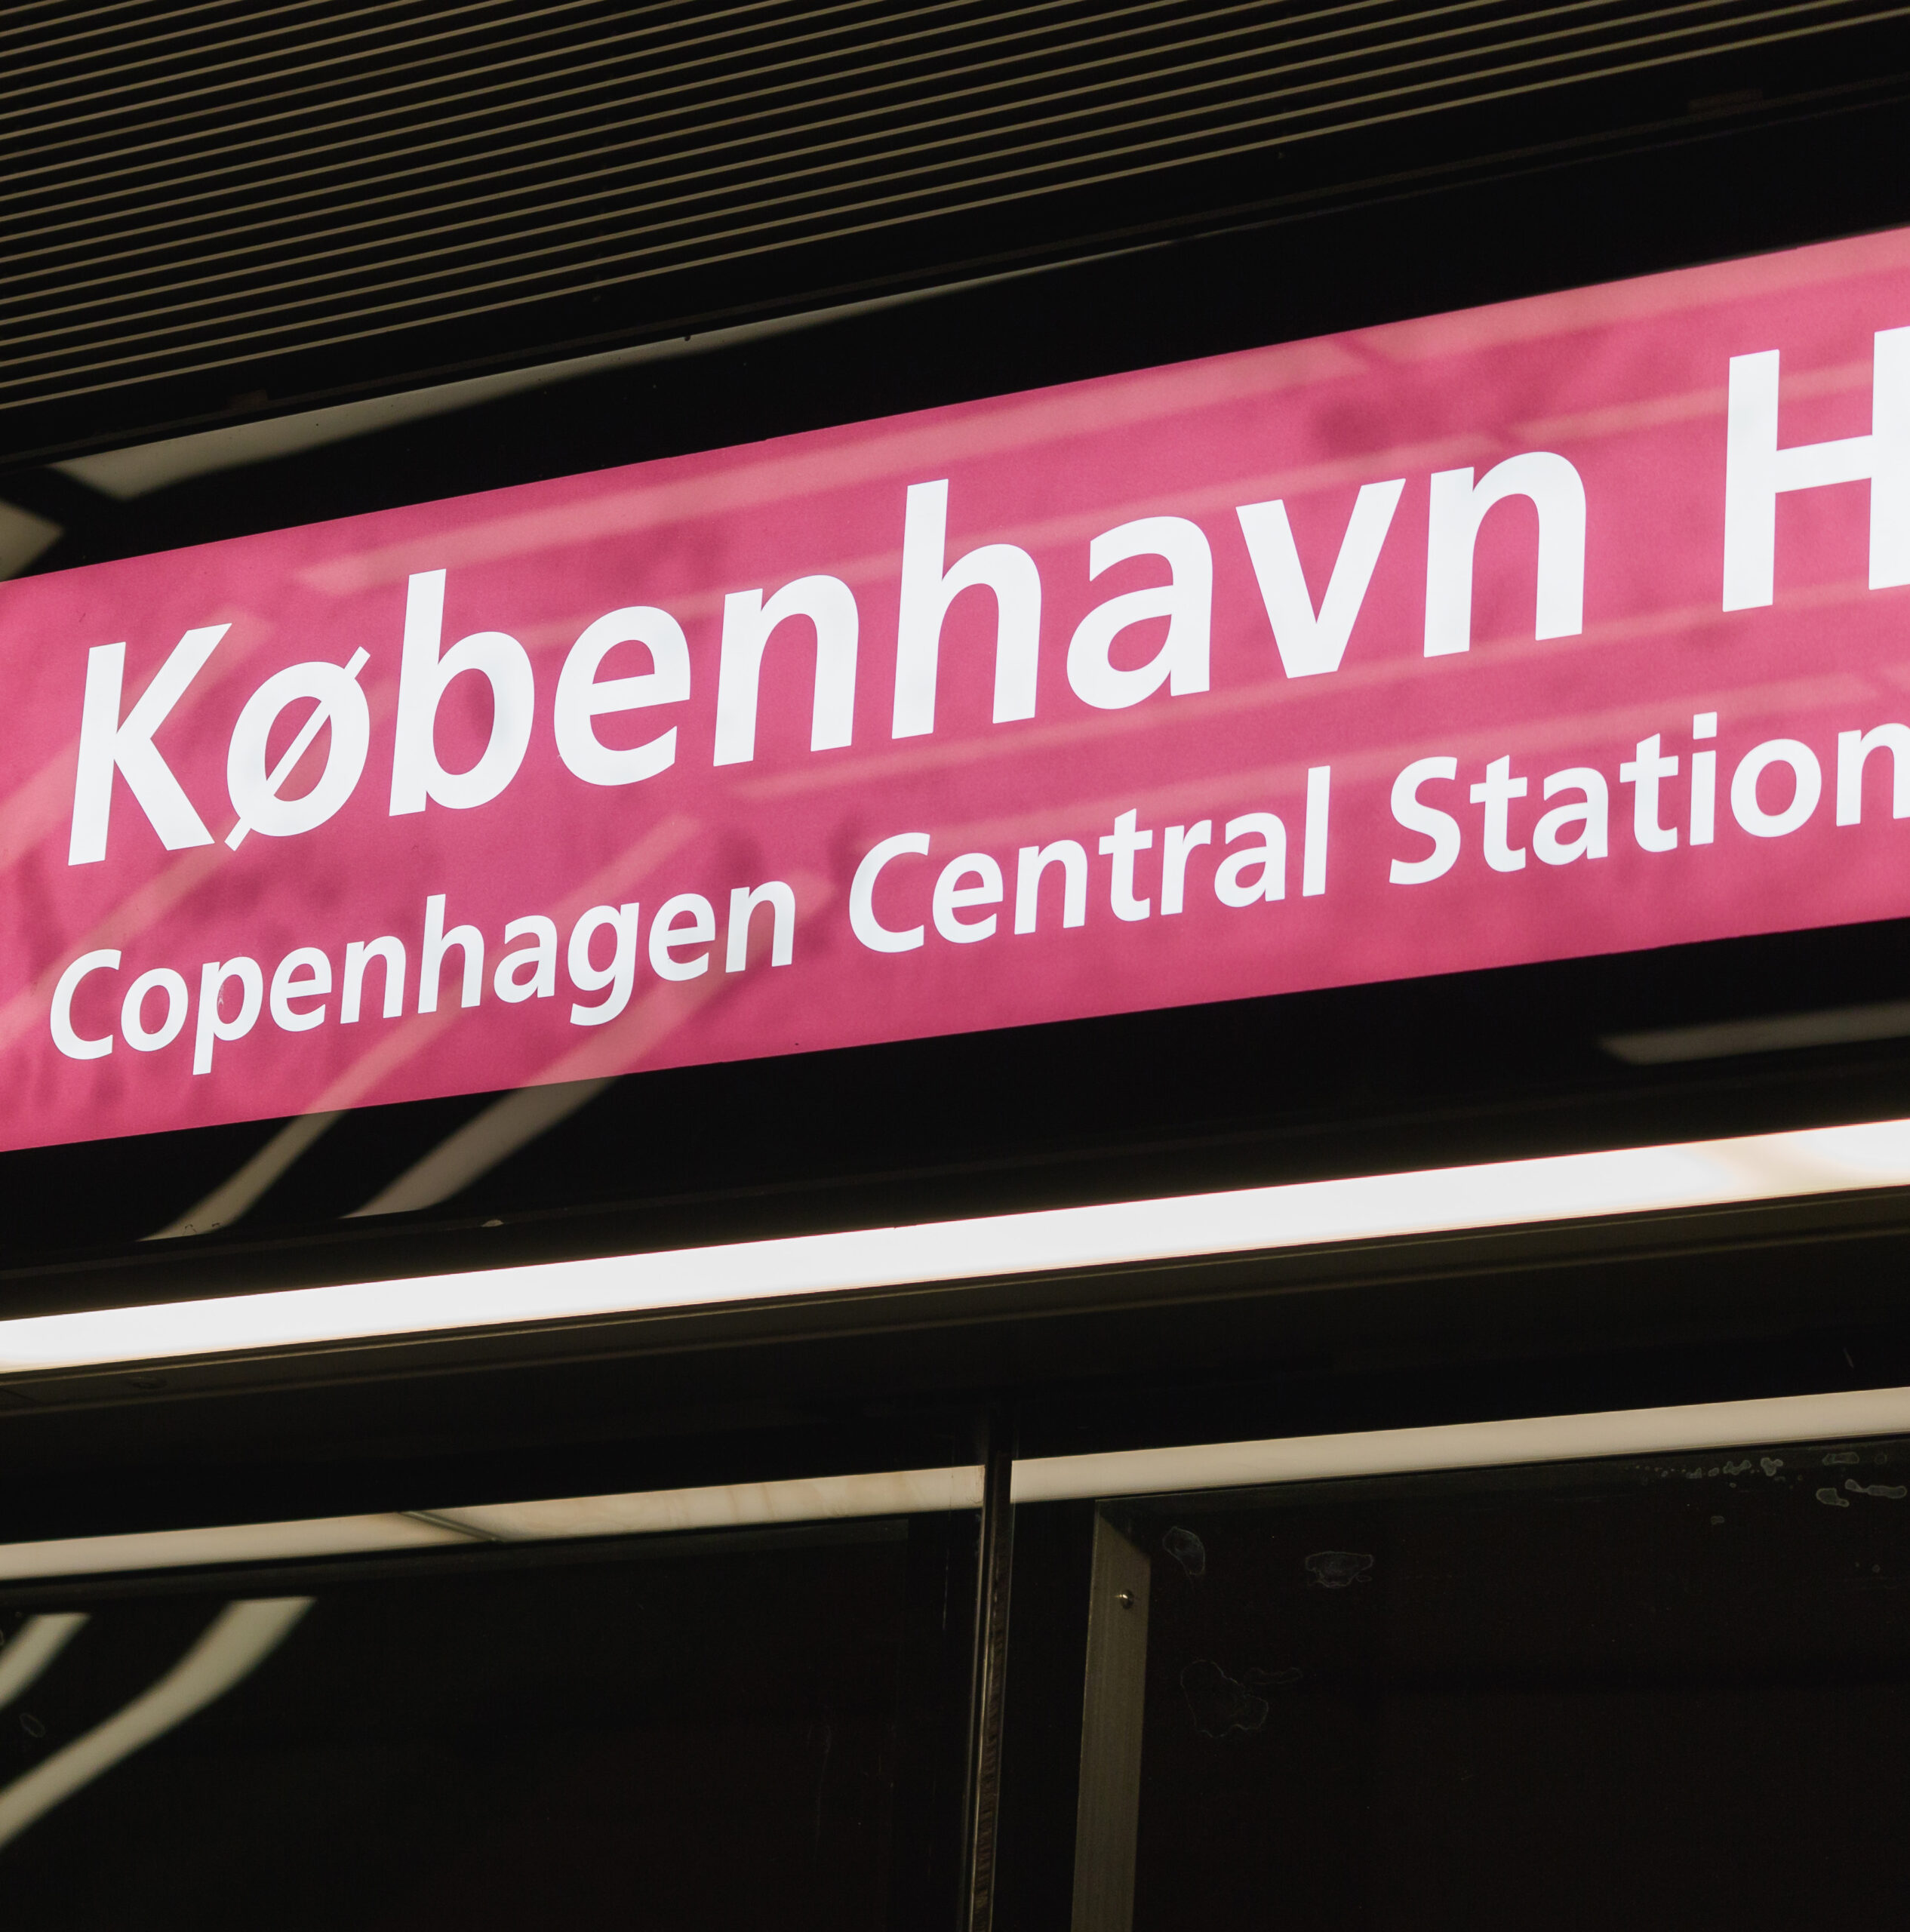 Copenhagen Metro – Cityringen (Circle Line): Reducing risk using progressive assurance